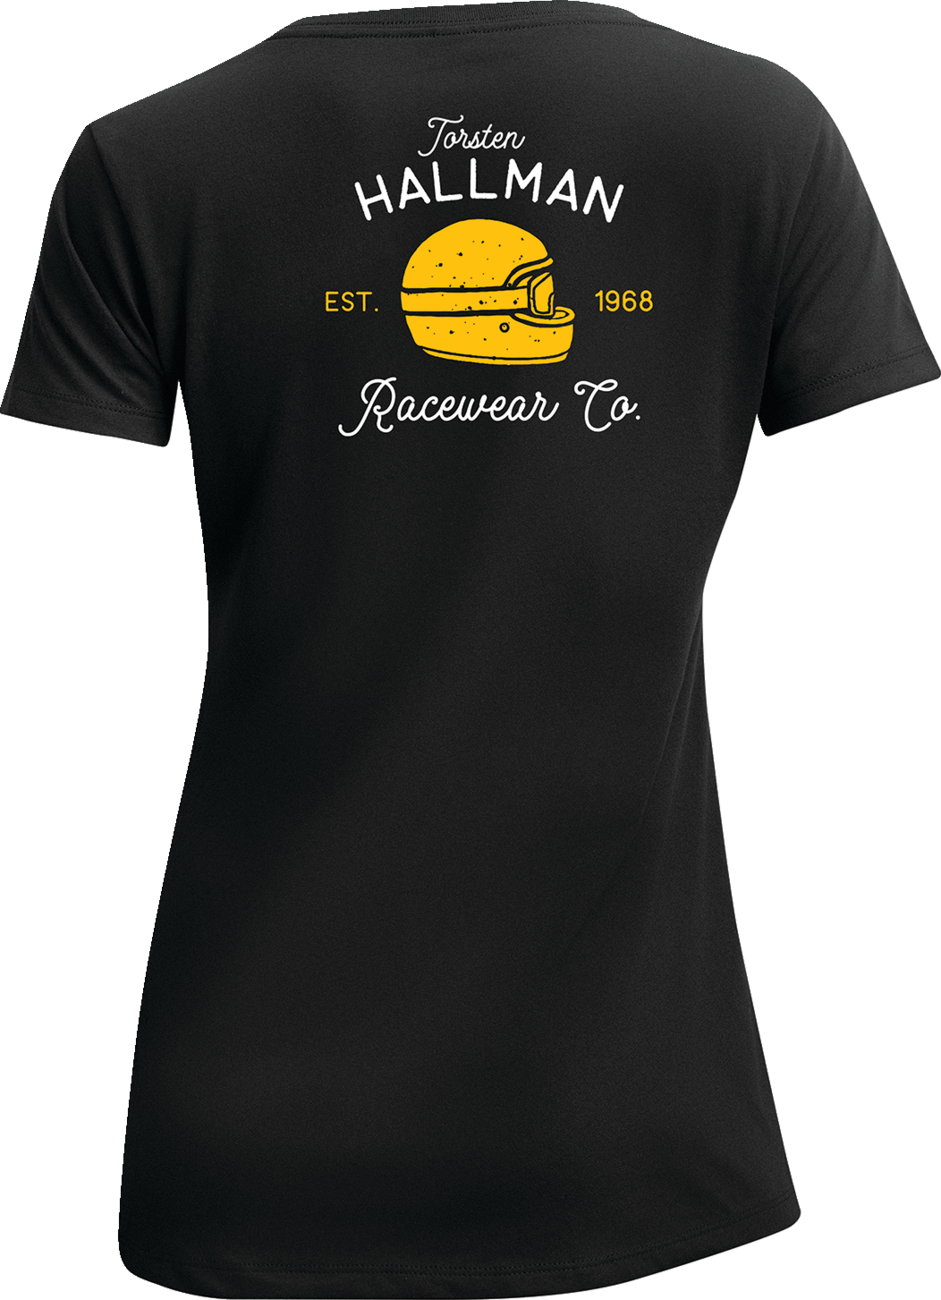 THOR Women's Hallman Garage T-Shirt - Black - XL 3031-4133